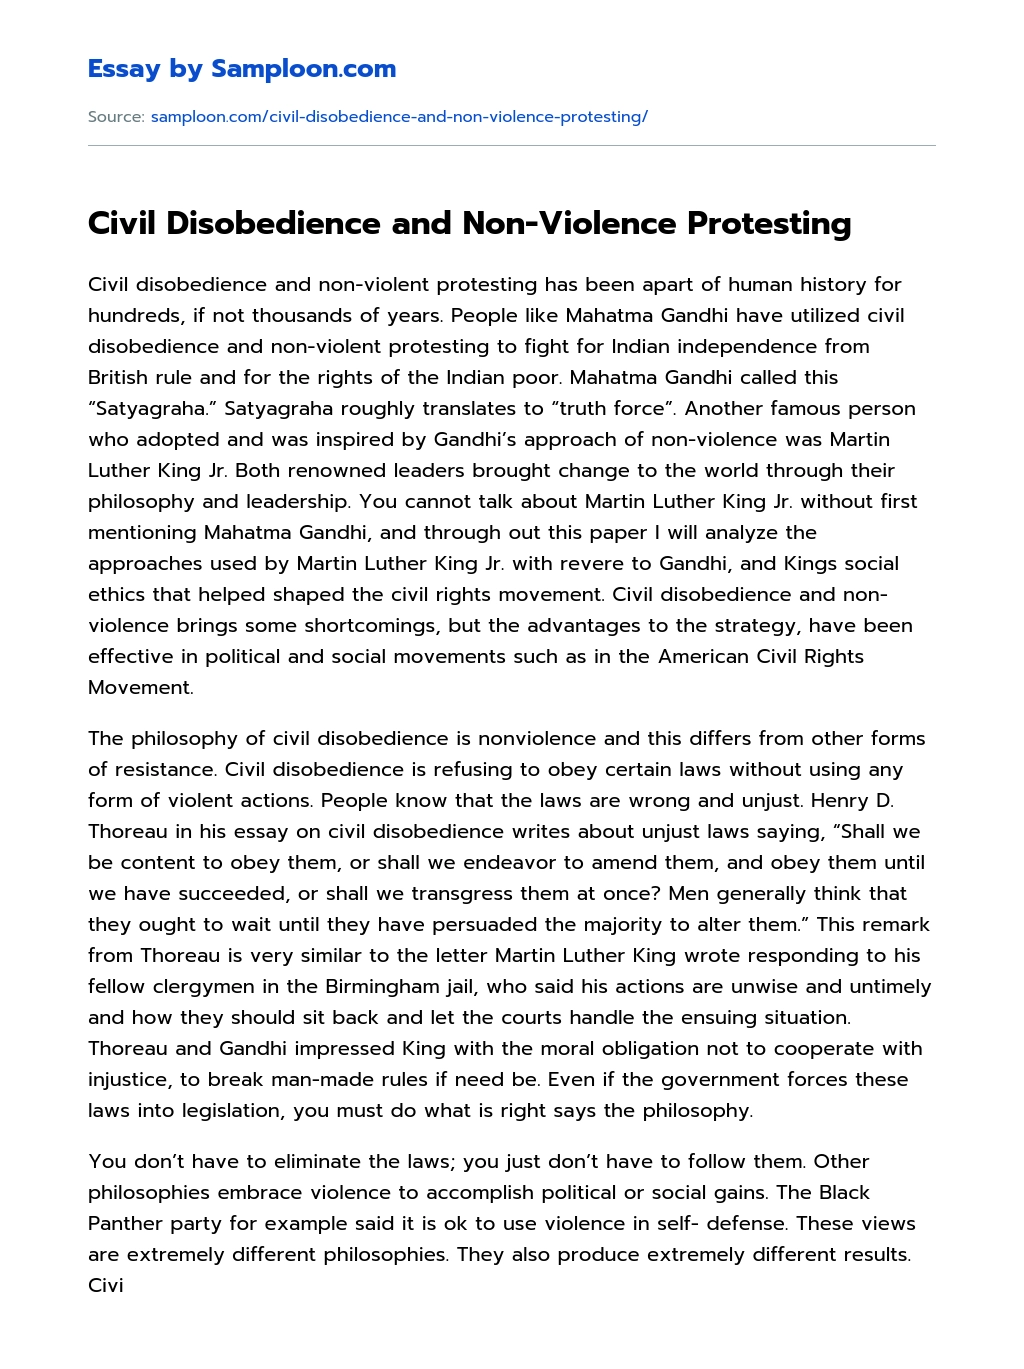 Civil Disobedience and Non-Violence Protesting essay